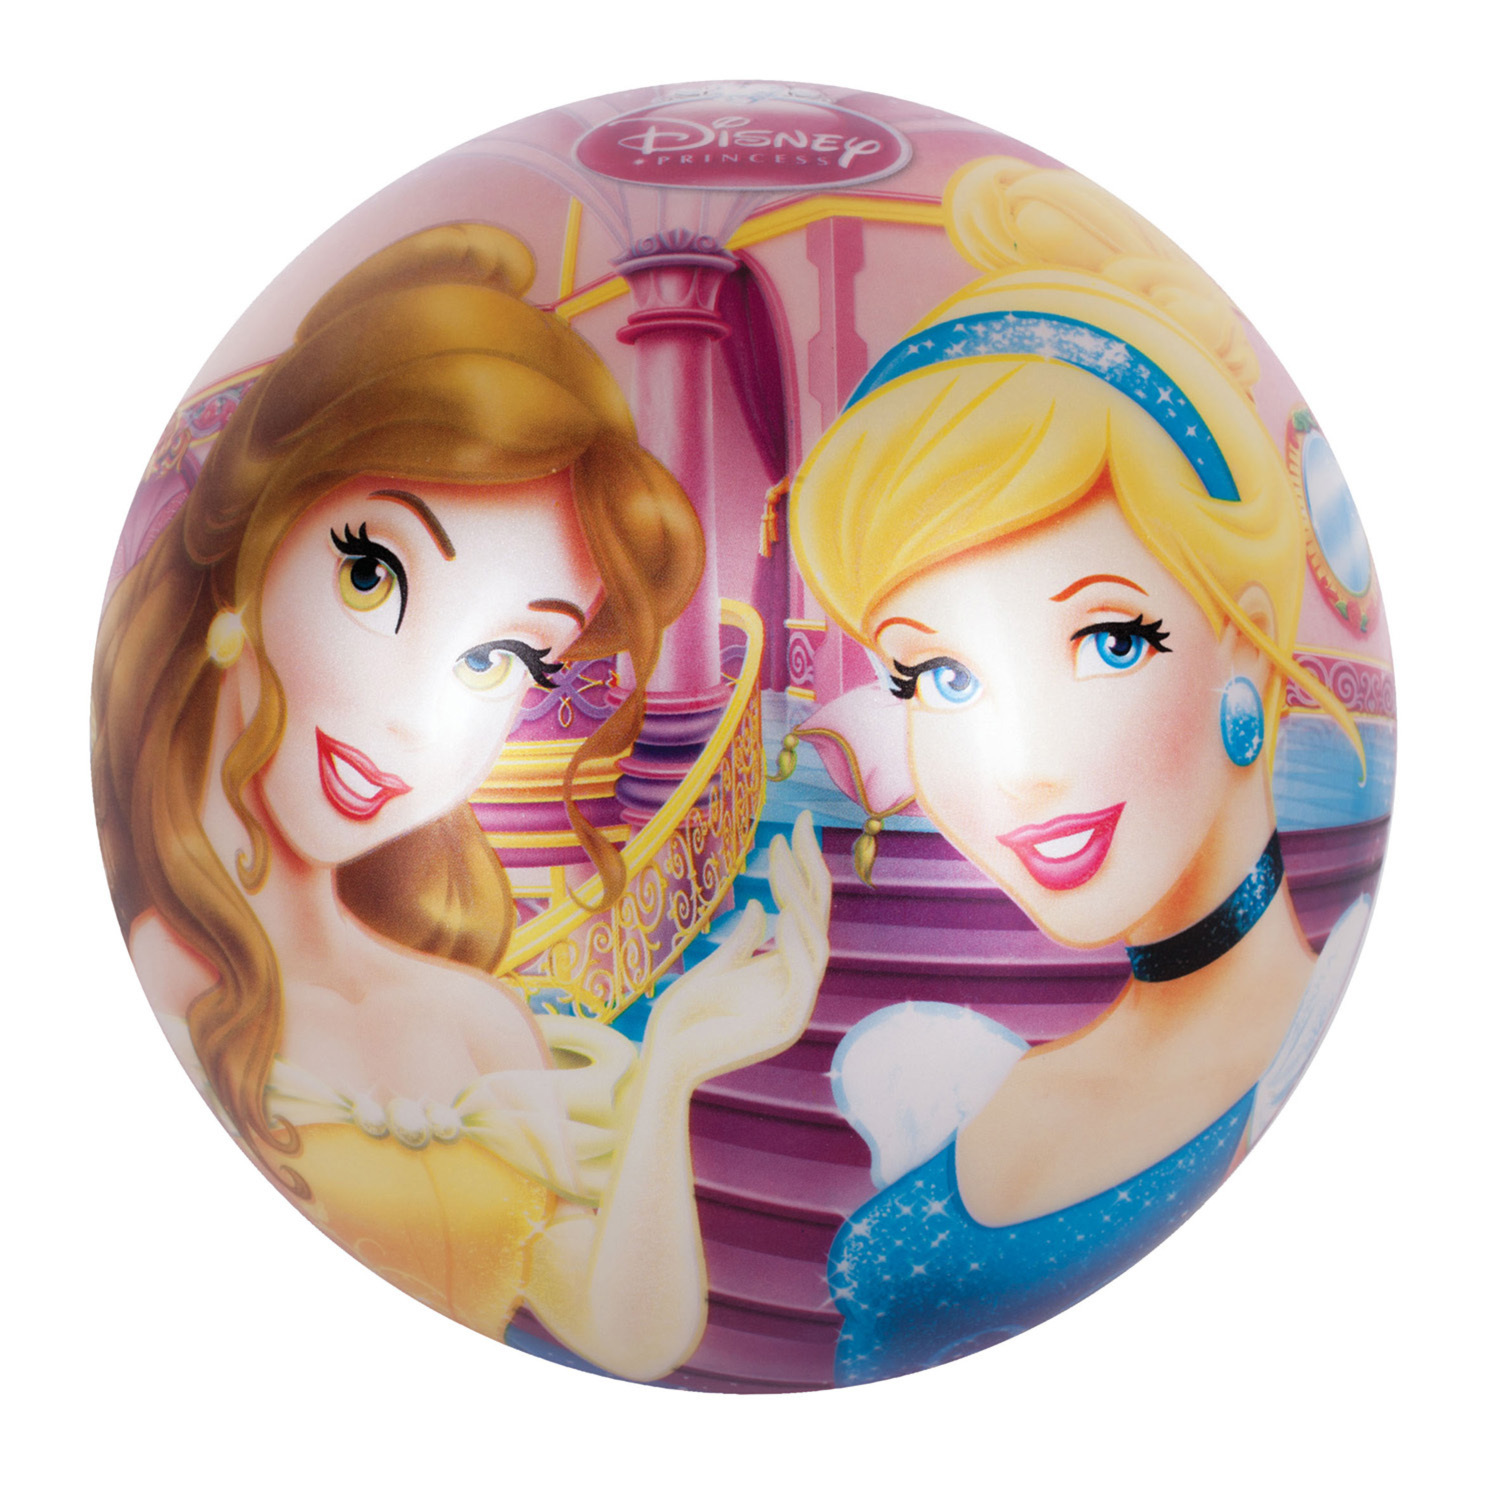 Disney Princess Belle and Cinderella 23cm Playball Image